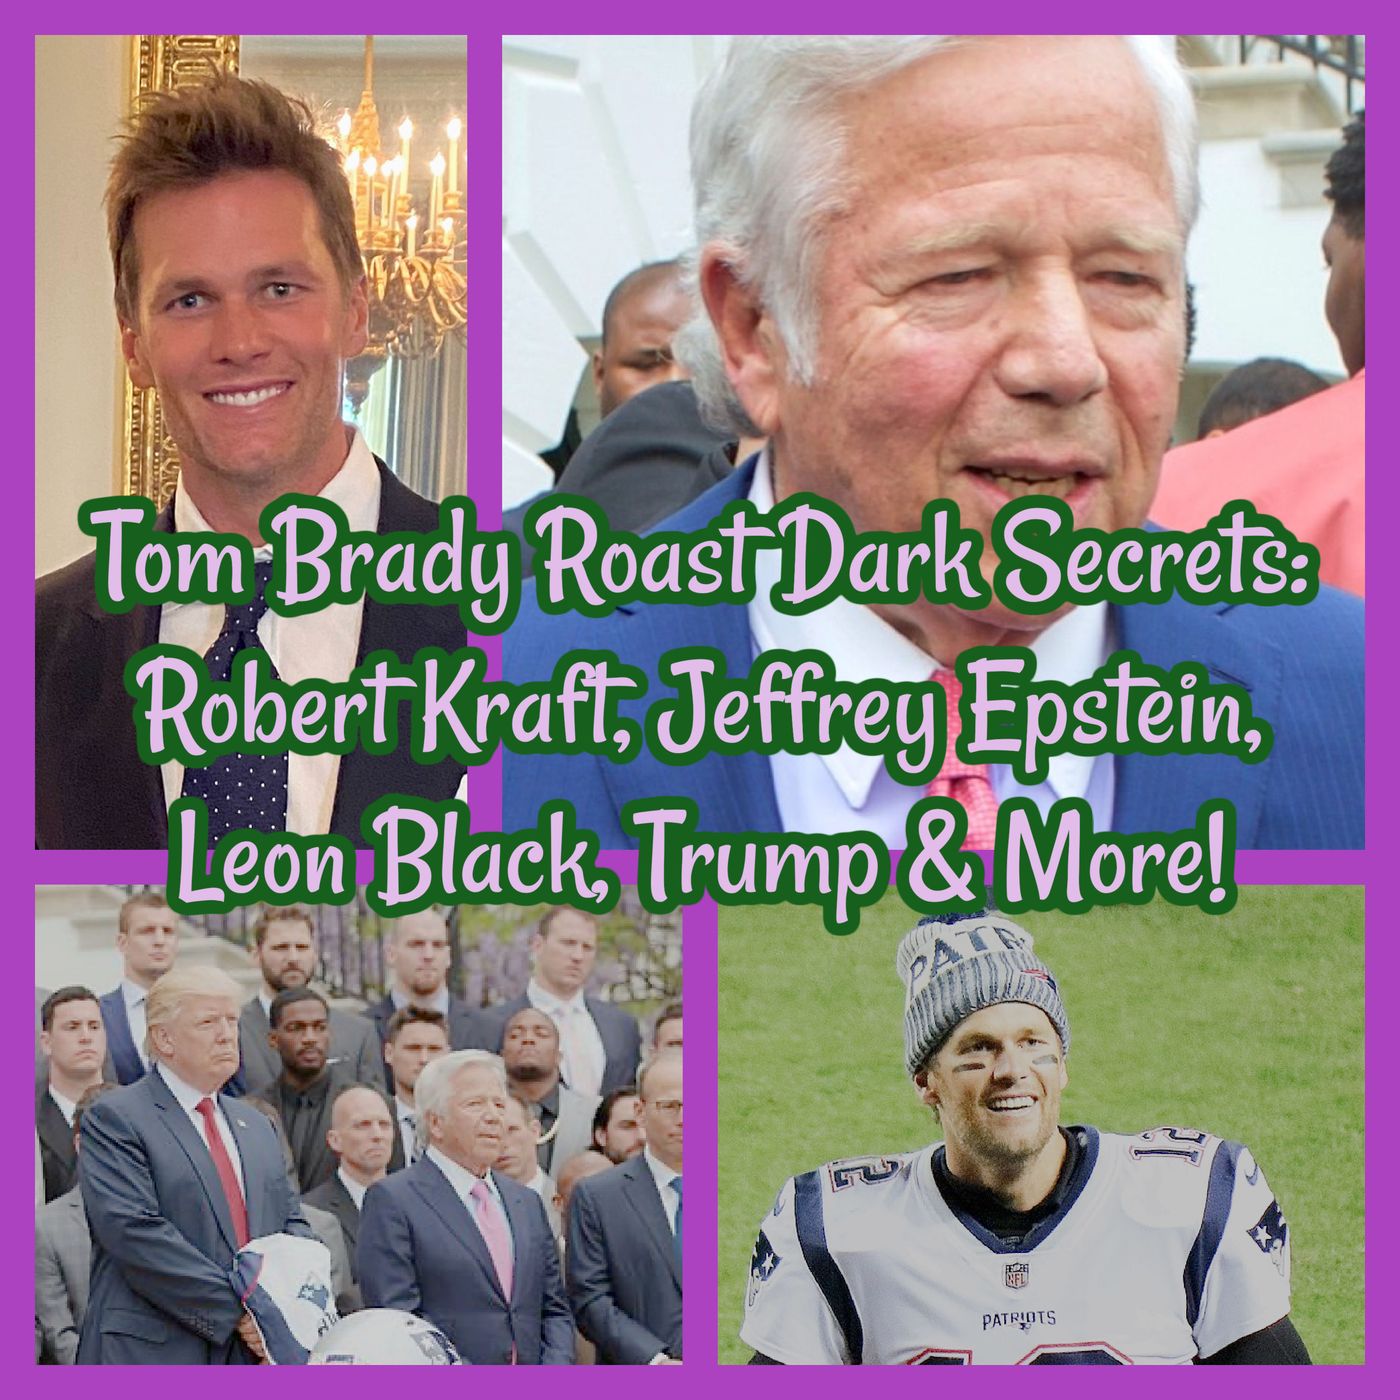 Tom Brady Roast Dark Secrets: Robert Kraft, Jeffrey Epstein, Leon Black, Trump & More!